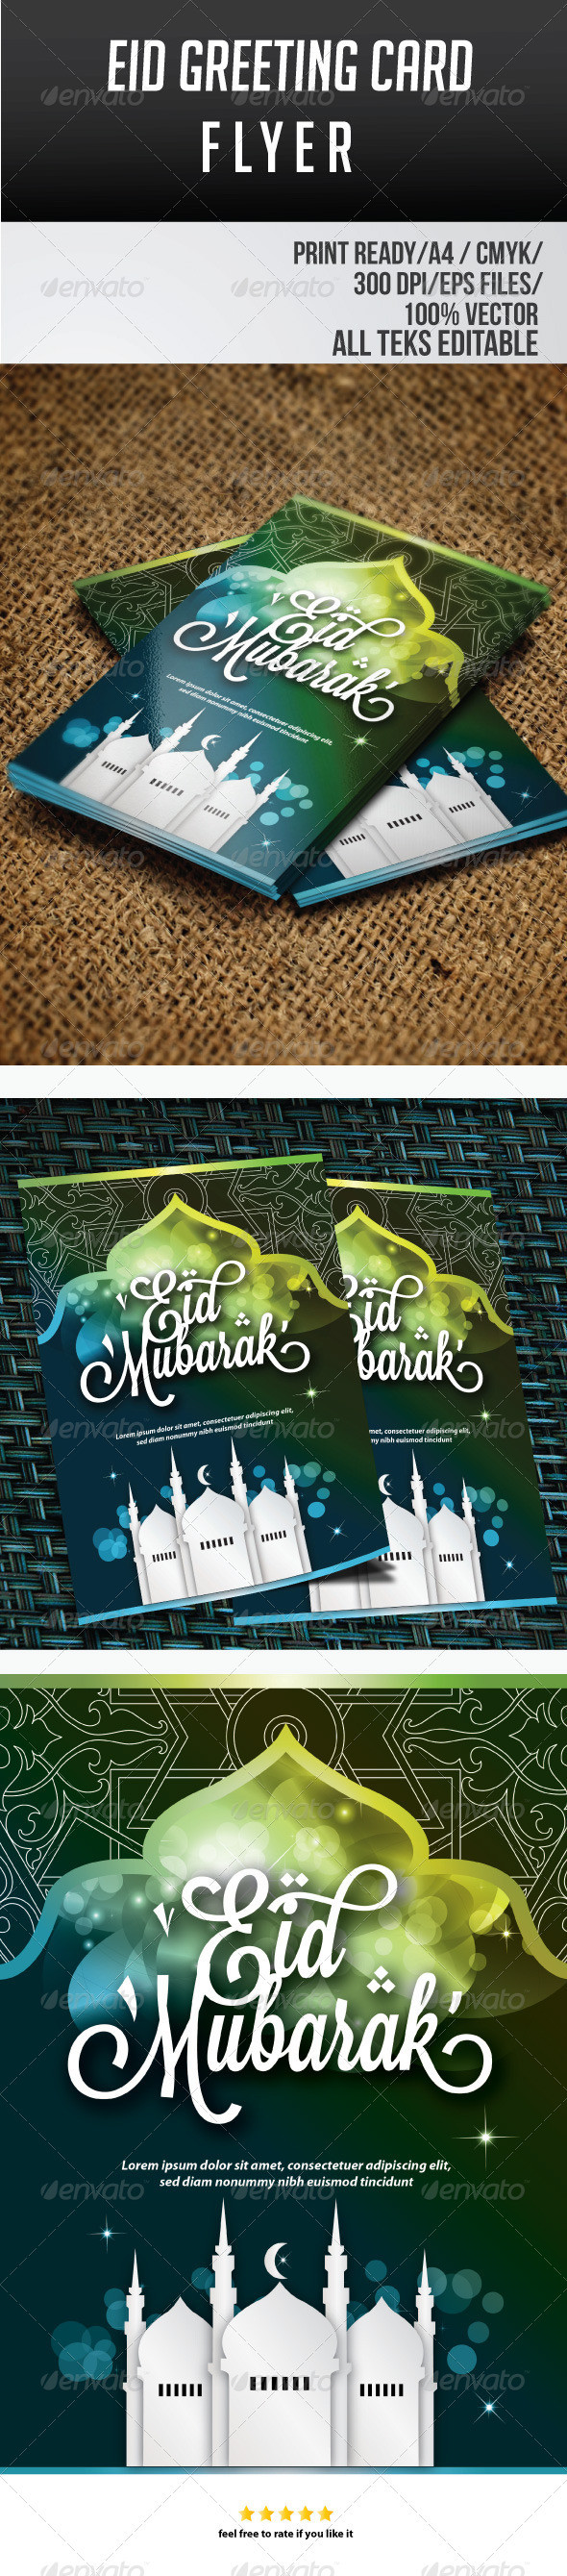 Preview eid mubarak